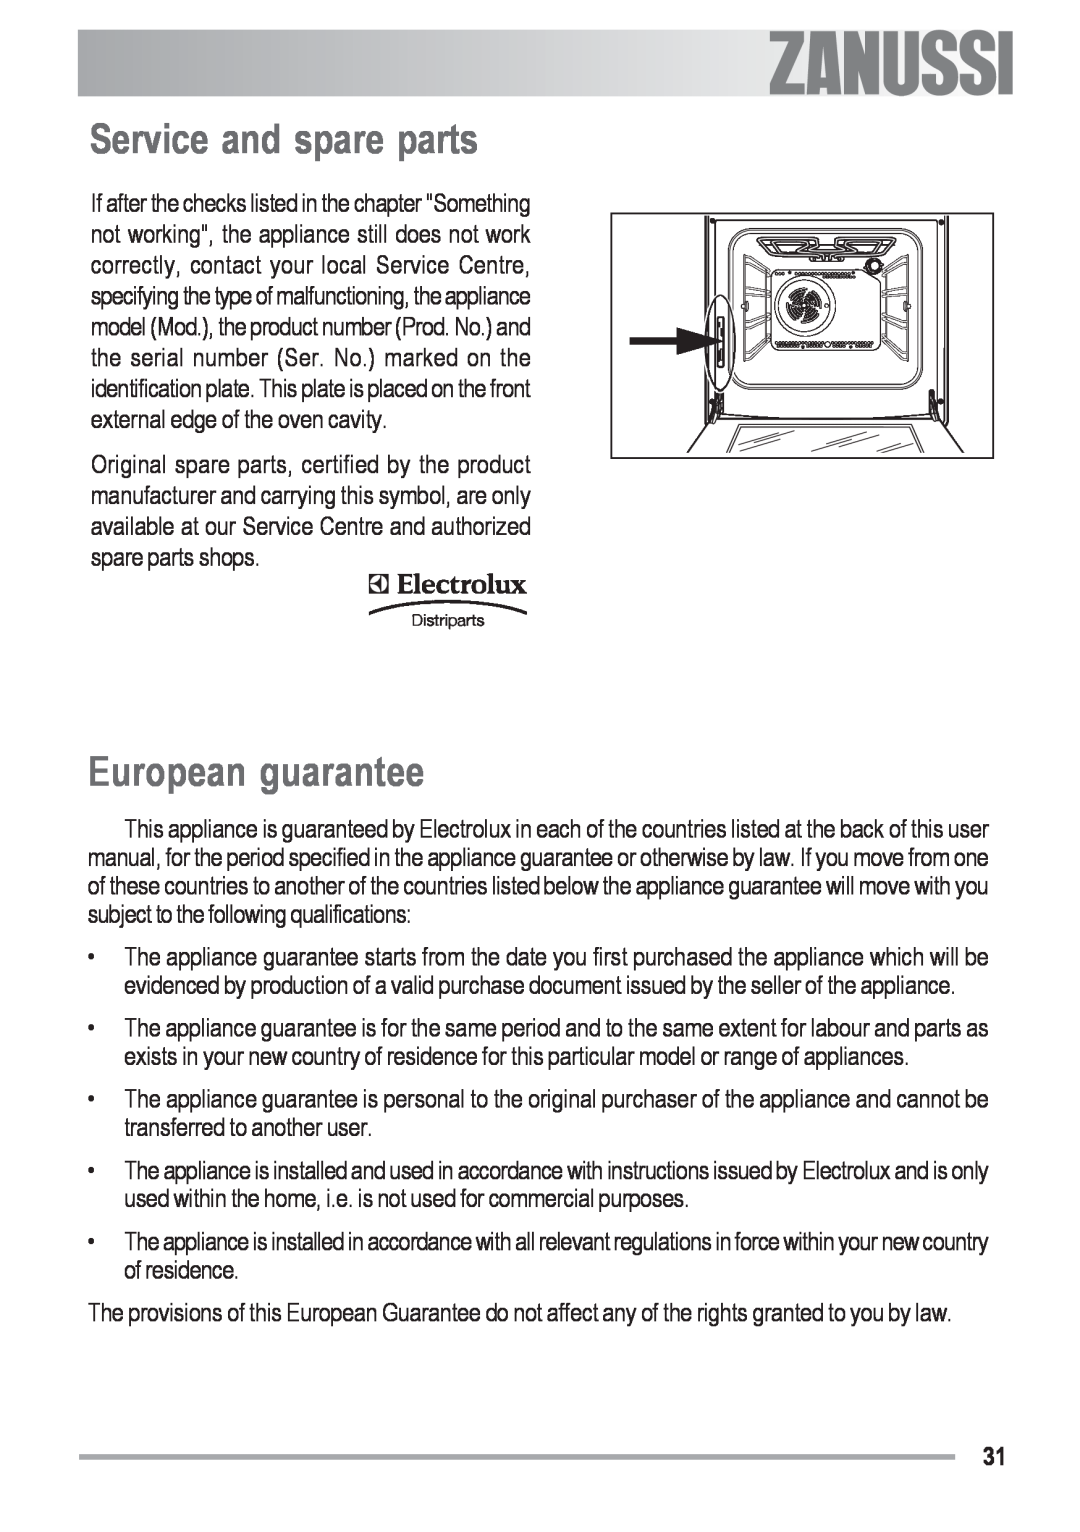 Zanussi ZOB 691 manual Service and spare parts, European guarantee, electrolux 